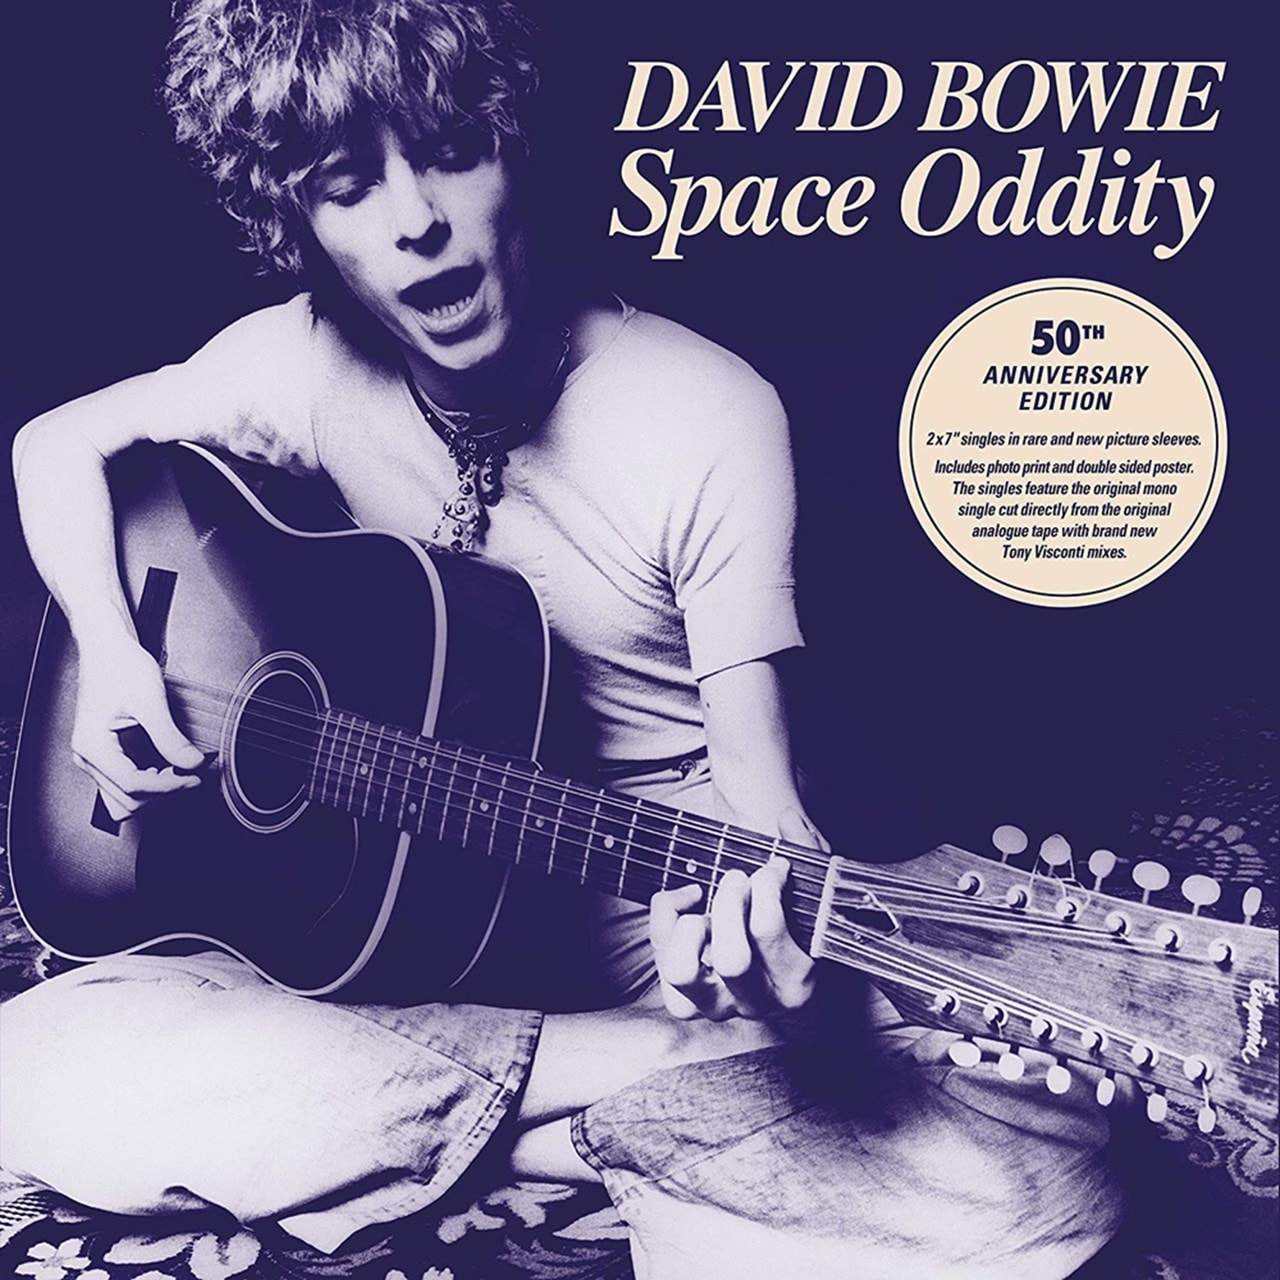 David bowie's space oddity. David Bowie 1969 album. Space Oddity 1969. David Bowie Space Oddity 1969. Дэвид Боуи Спэйс Оддити.